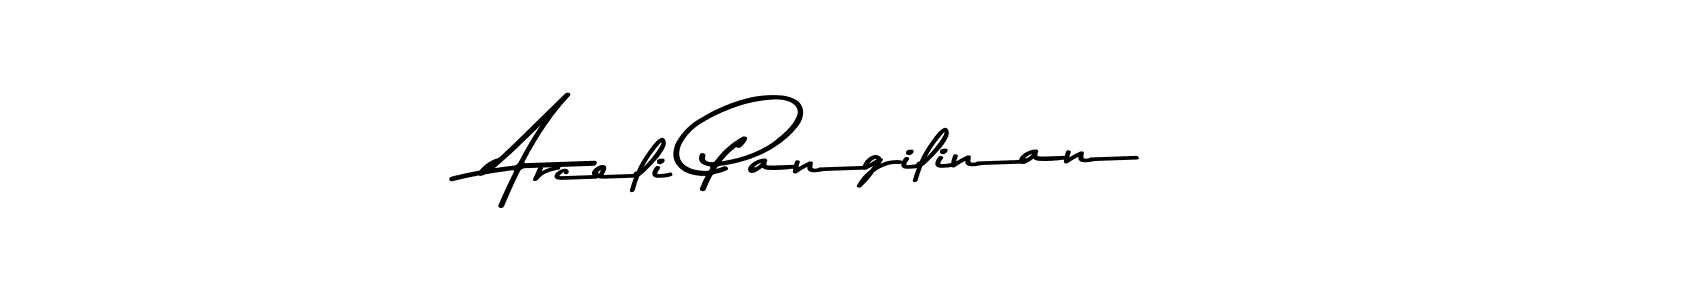 Make a beautiful signature design for name Arceli Pangilinan. Use this online signature maker to create a handwritten signature for free. Arceli Pangilinan signature style 9 images and pictures png